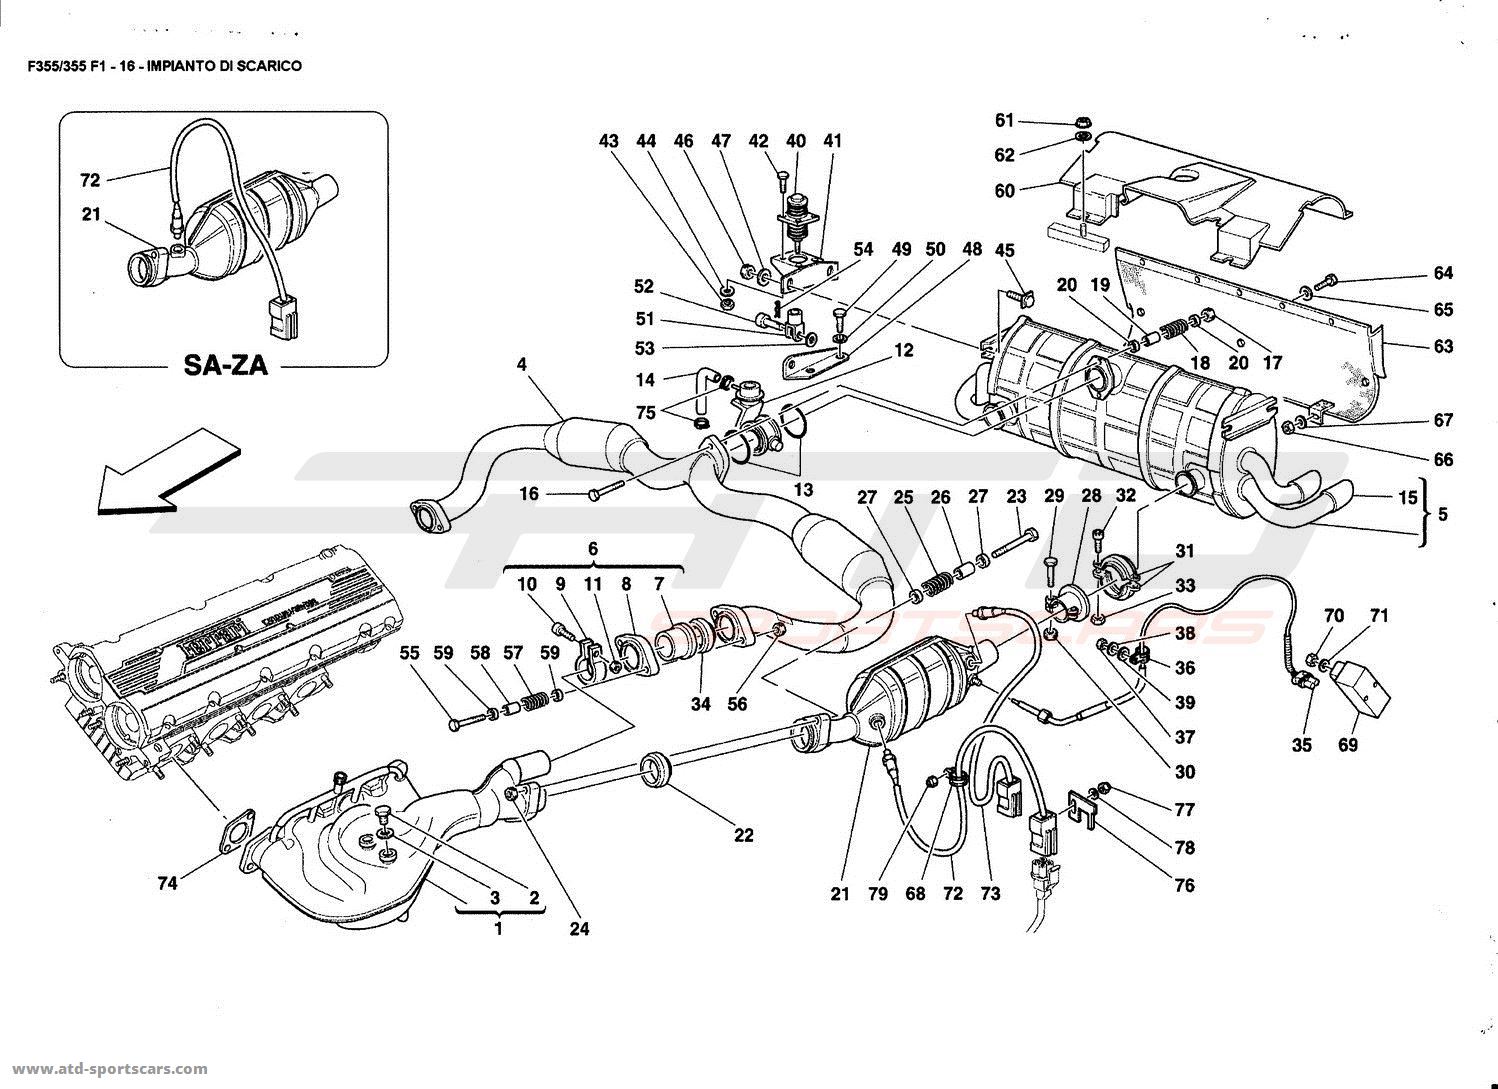 Ferrari F355 - 5.2 ET F1 EXHAUST SYSTEM parts at ATD-Sportscars | ATD ...